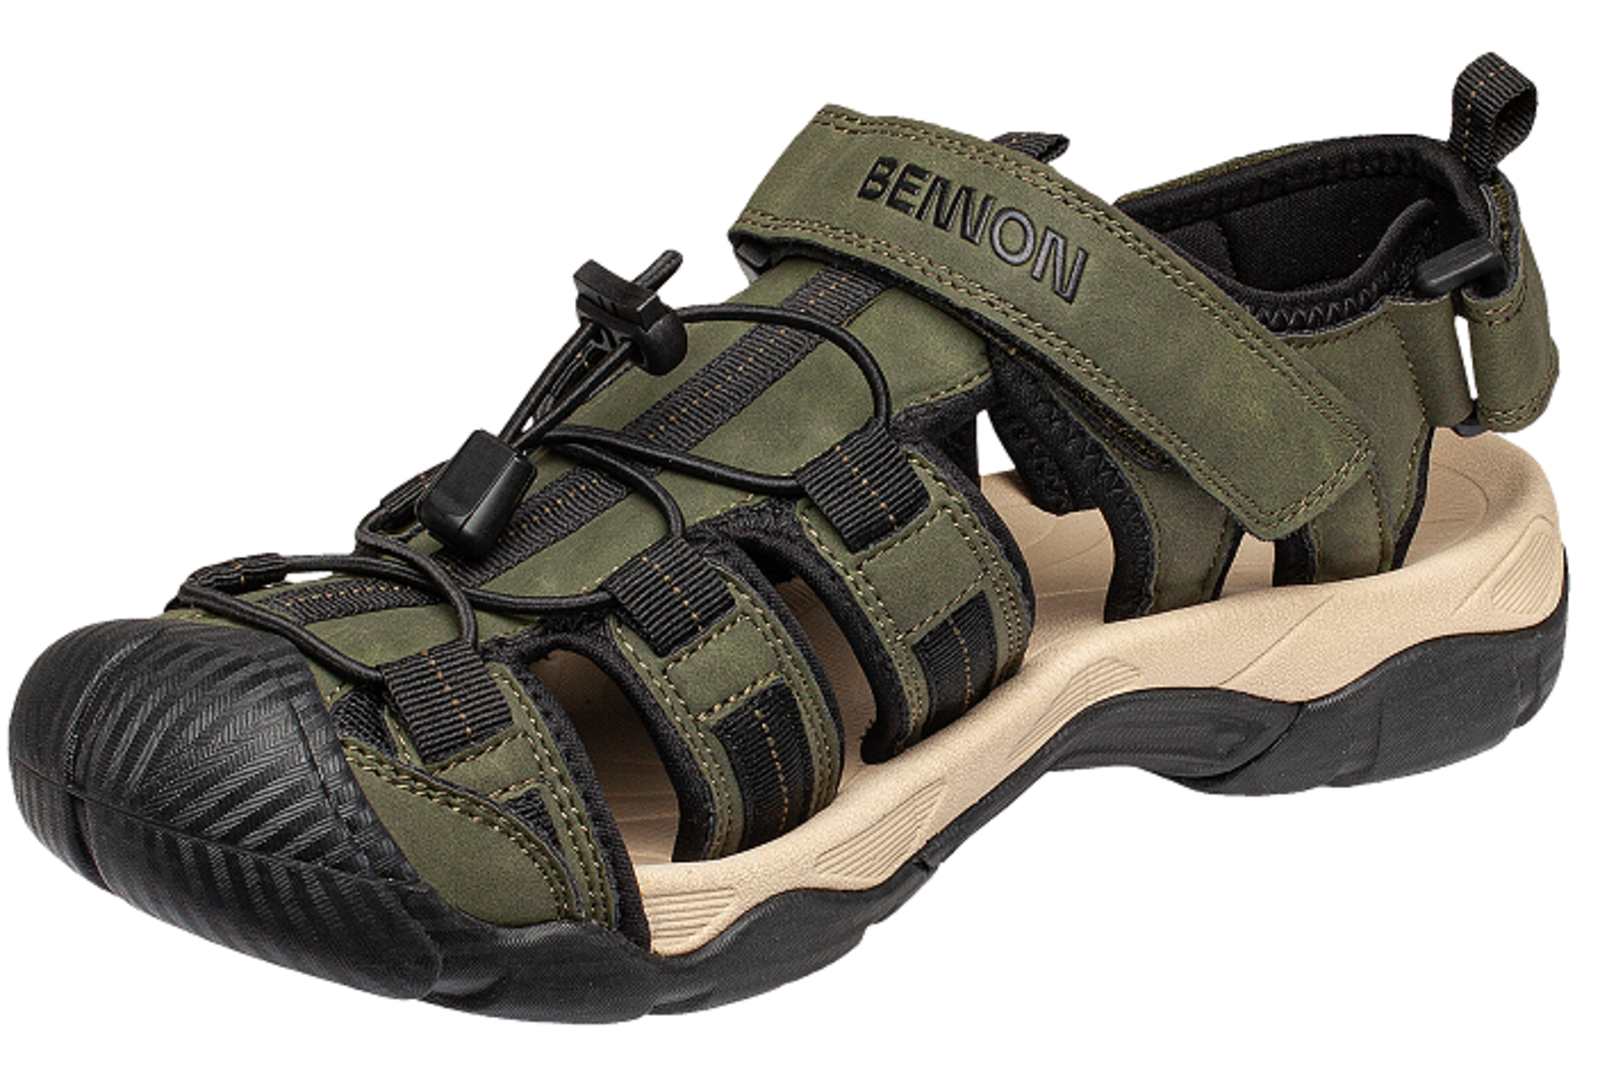 Ľahké sandále Bennon Amazon - veľkosť: 45, farba: zelená